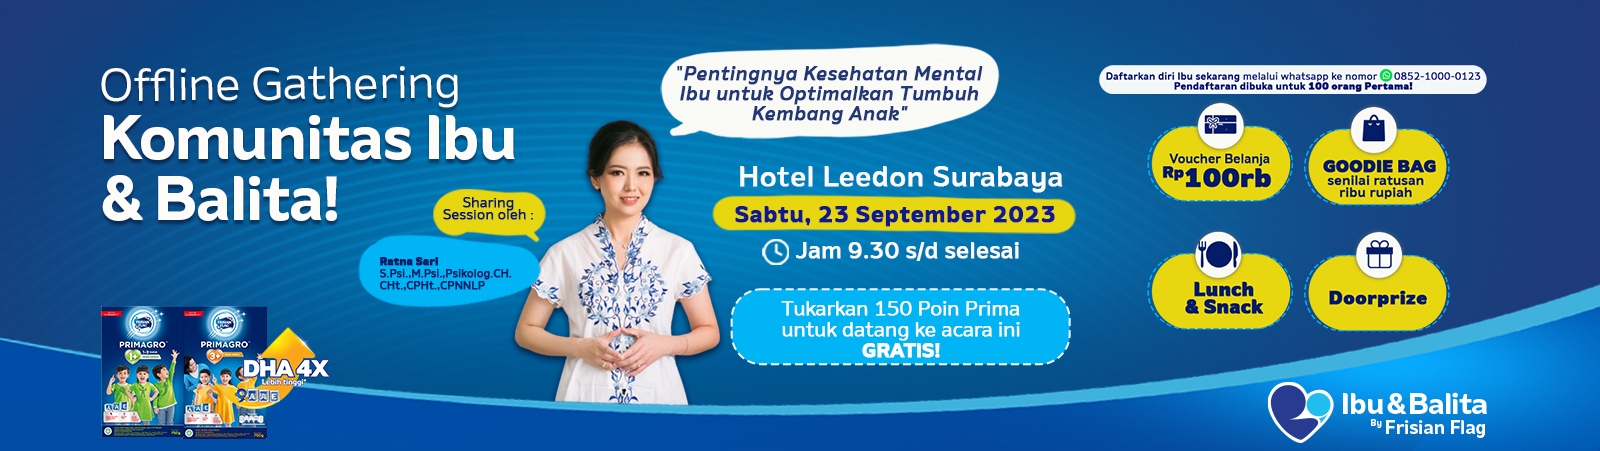 Syarat & Ketentuan Offline Gathering Member Ibu dan Balita Surabaya 23 September 2023